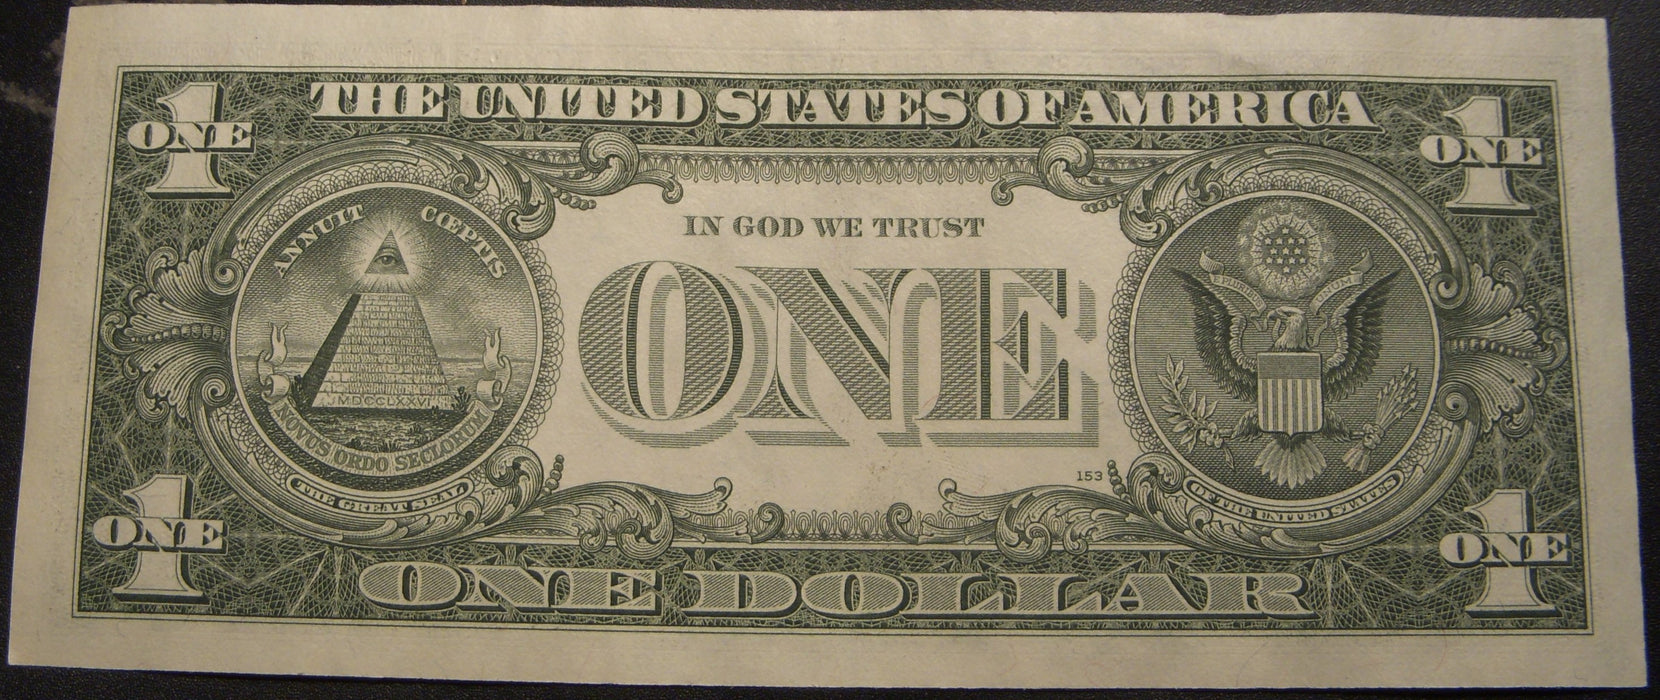 1981 (I) $1 Federal Reserve Note - Star Note FR# 1911I*